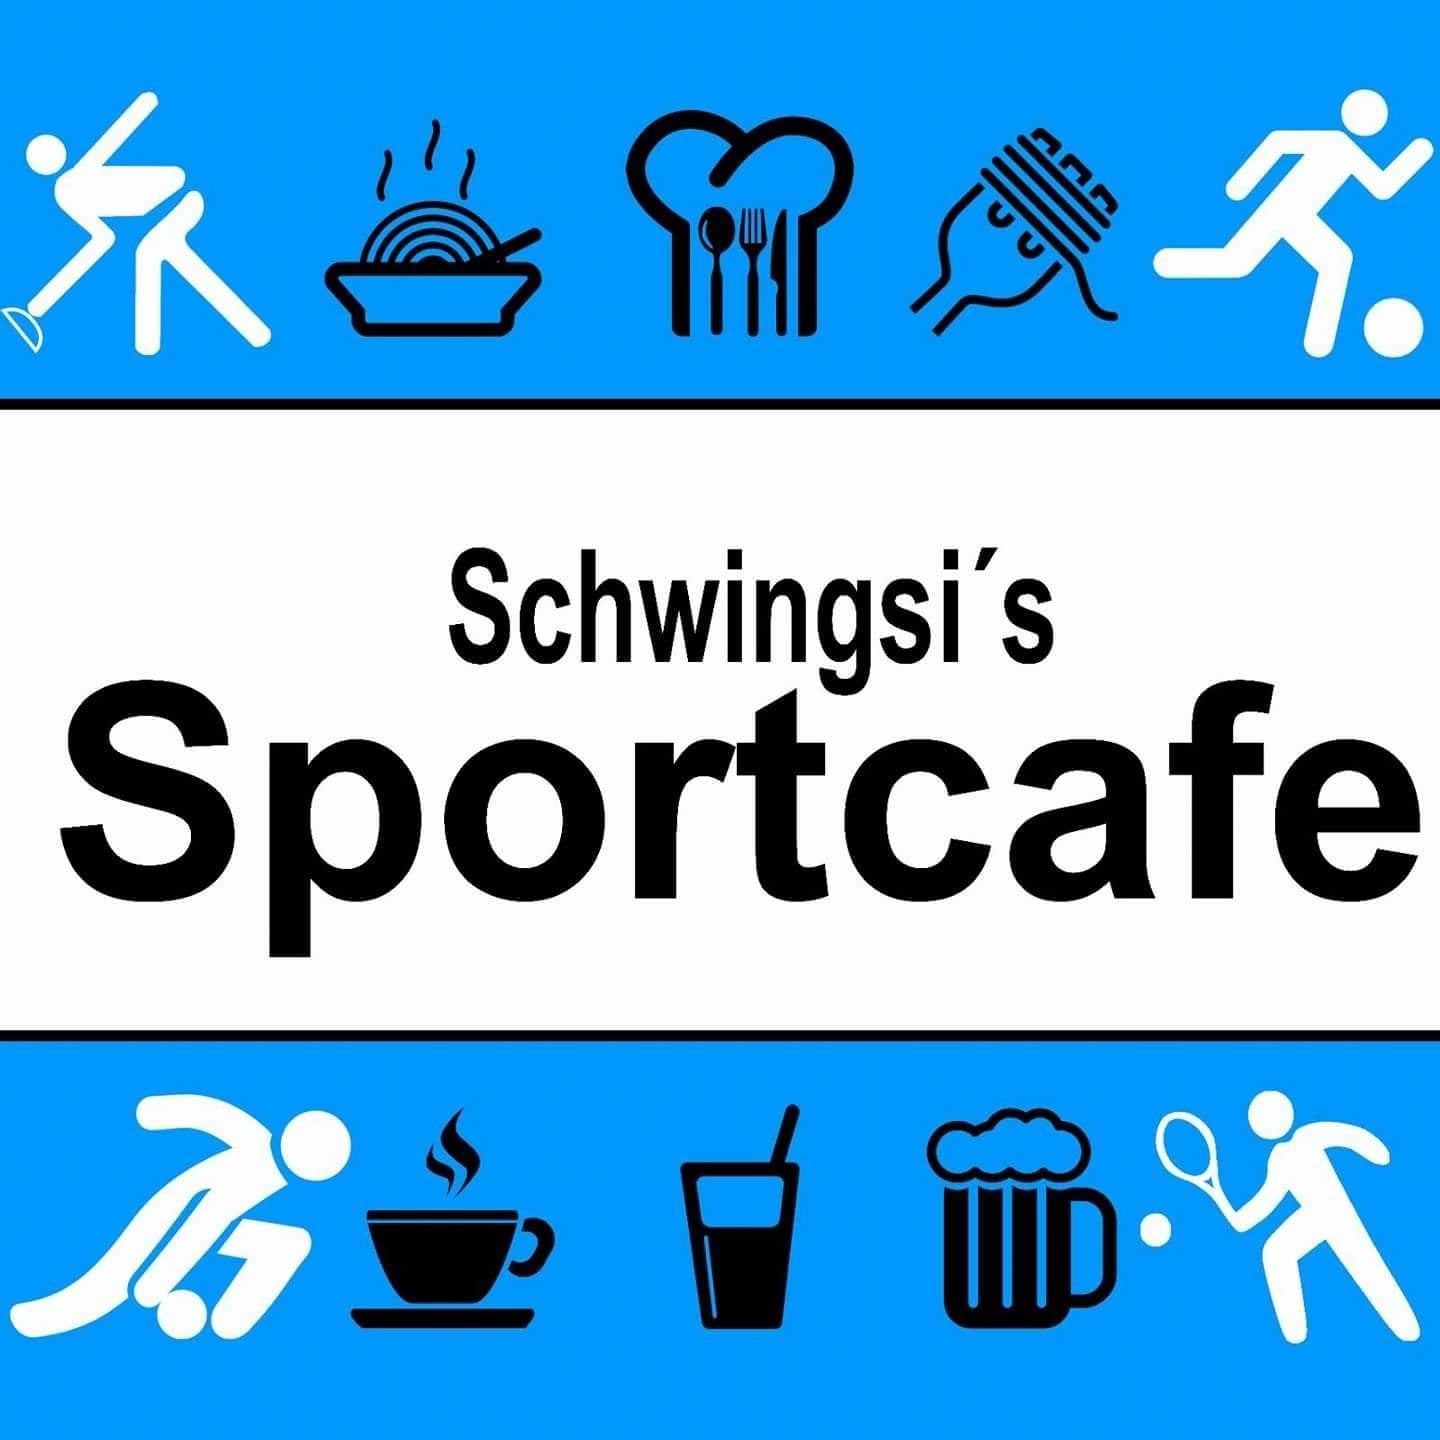 Schwingsiss Sportcafe